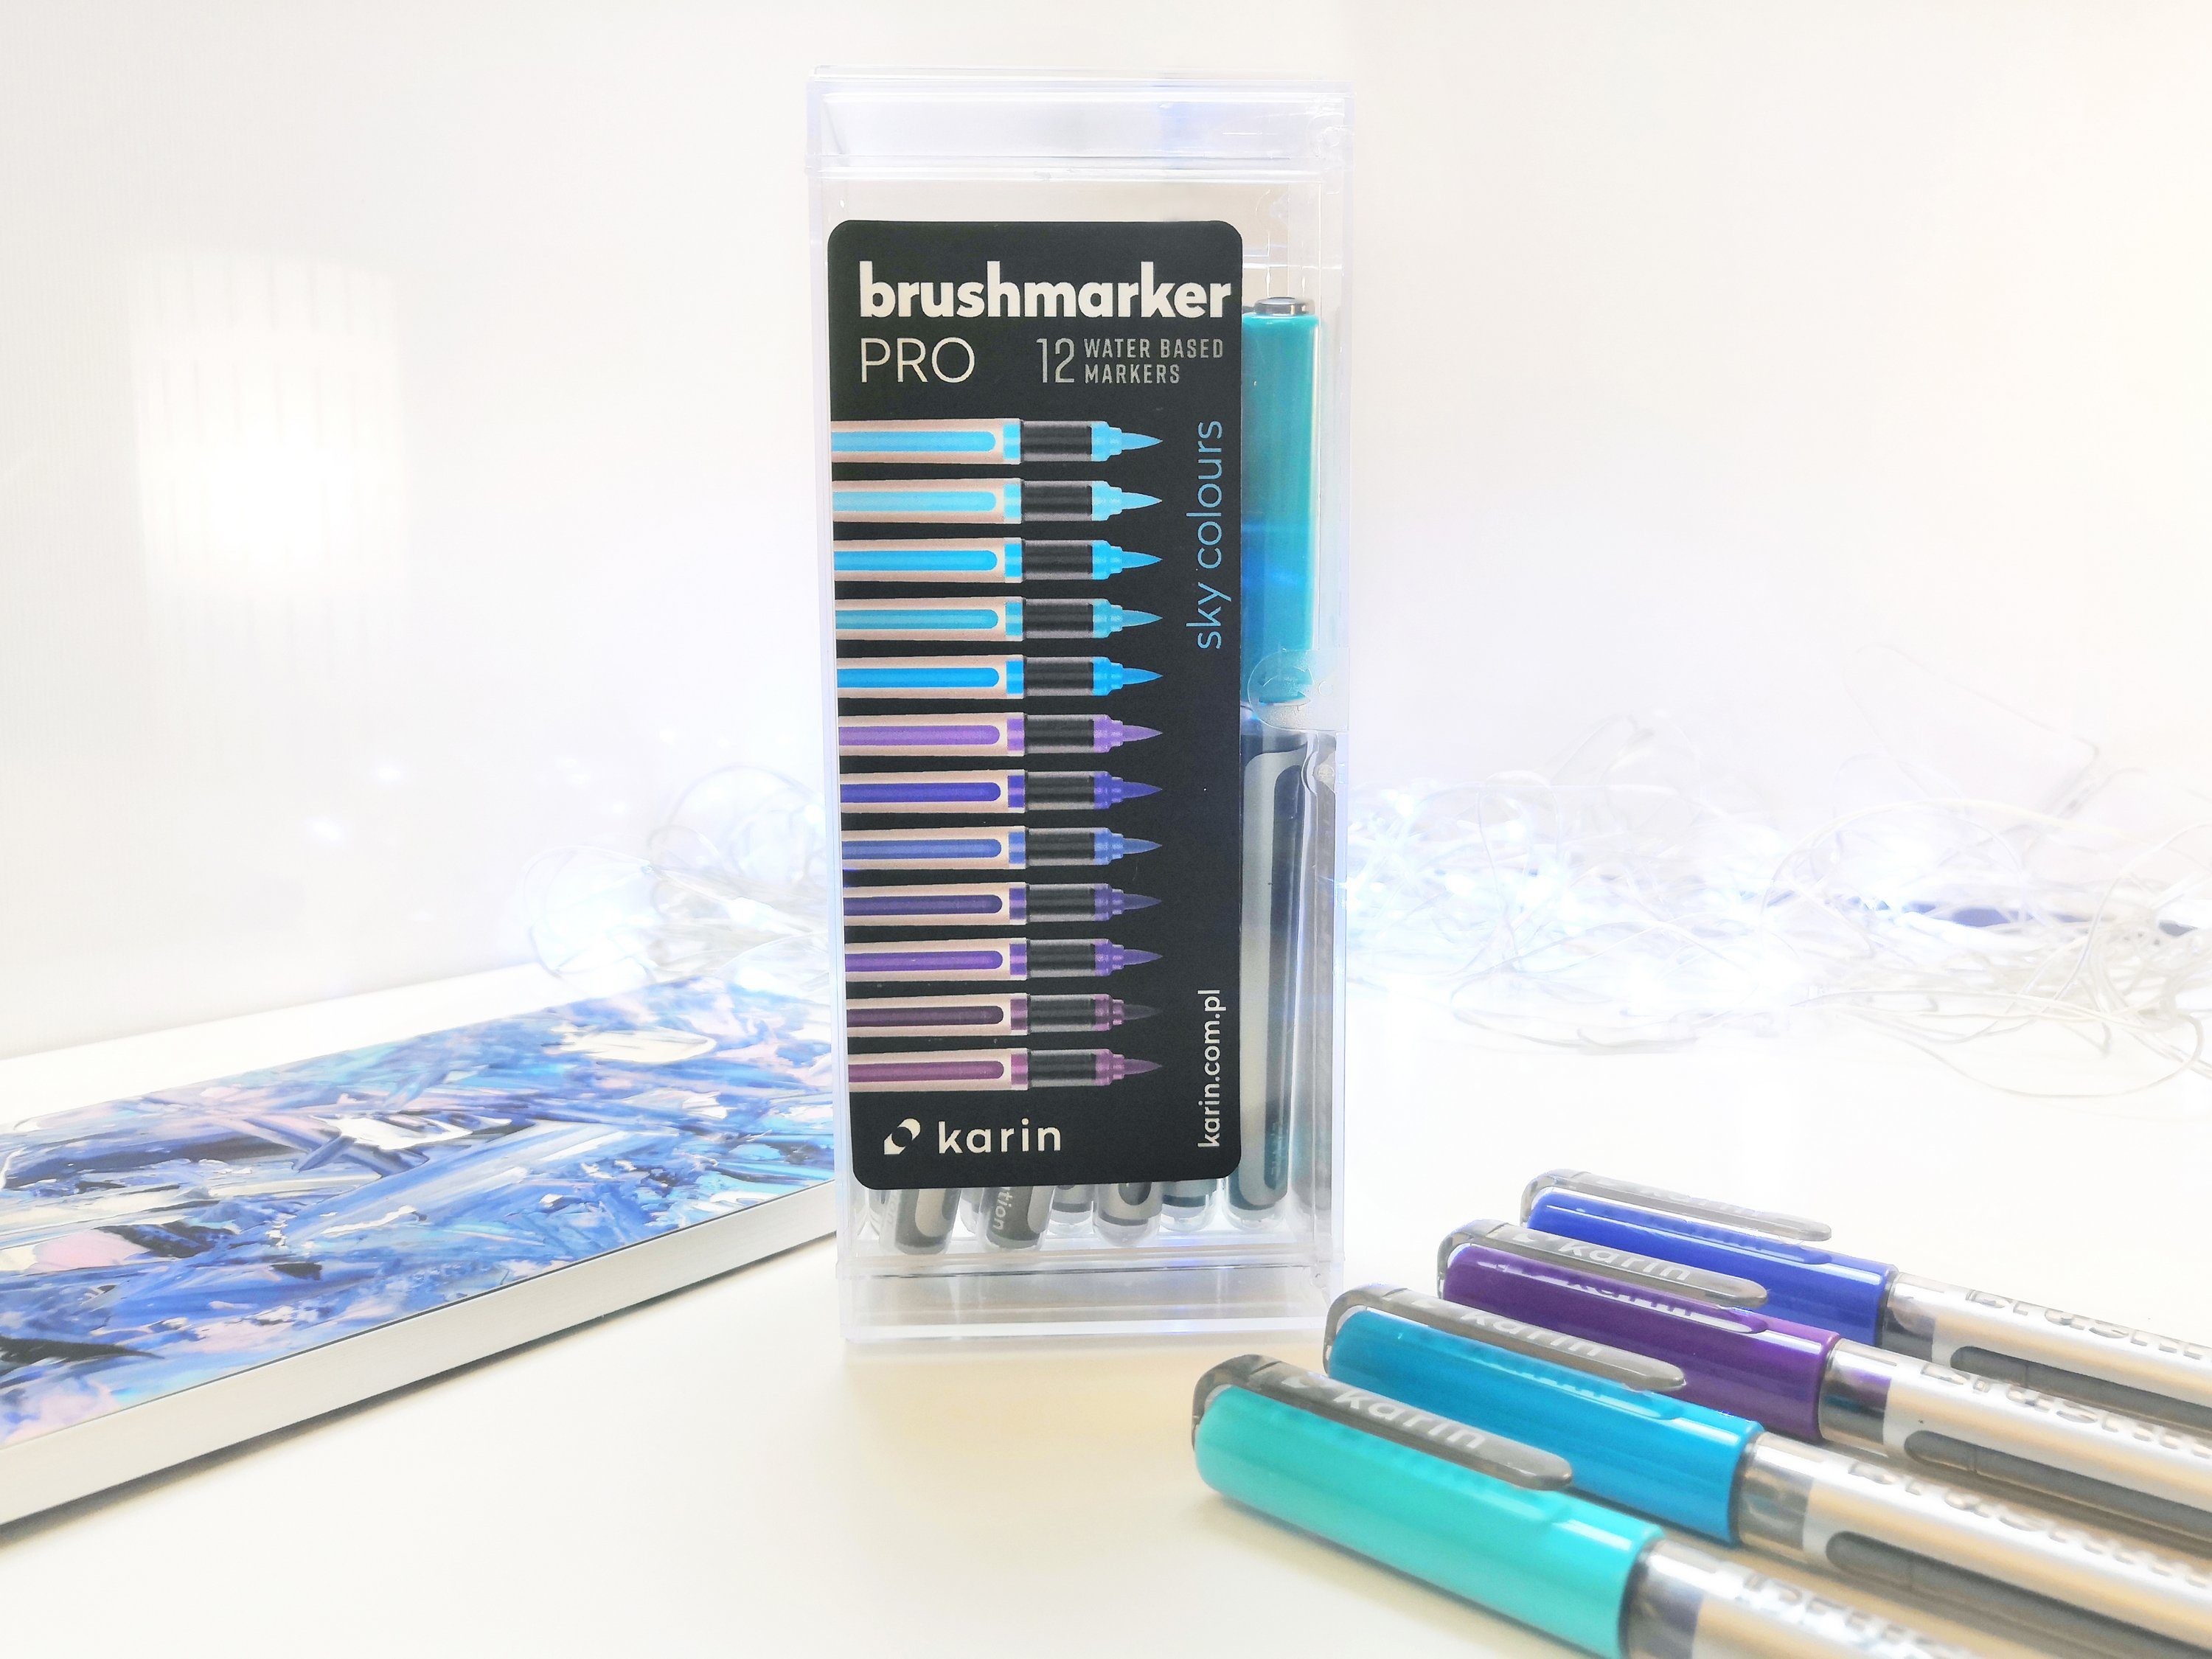 Farben PRO karin Pinselstift Blau 12 Brushmarker Set,